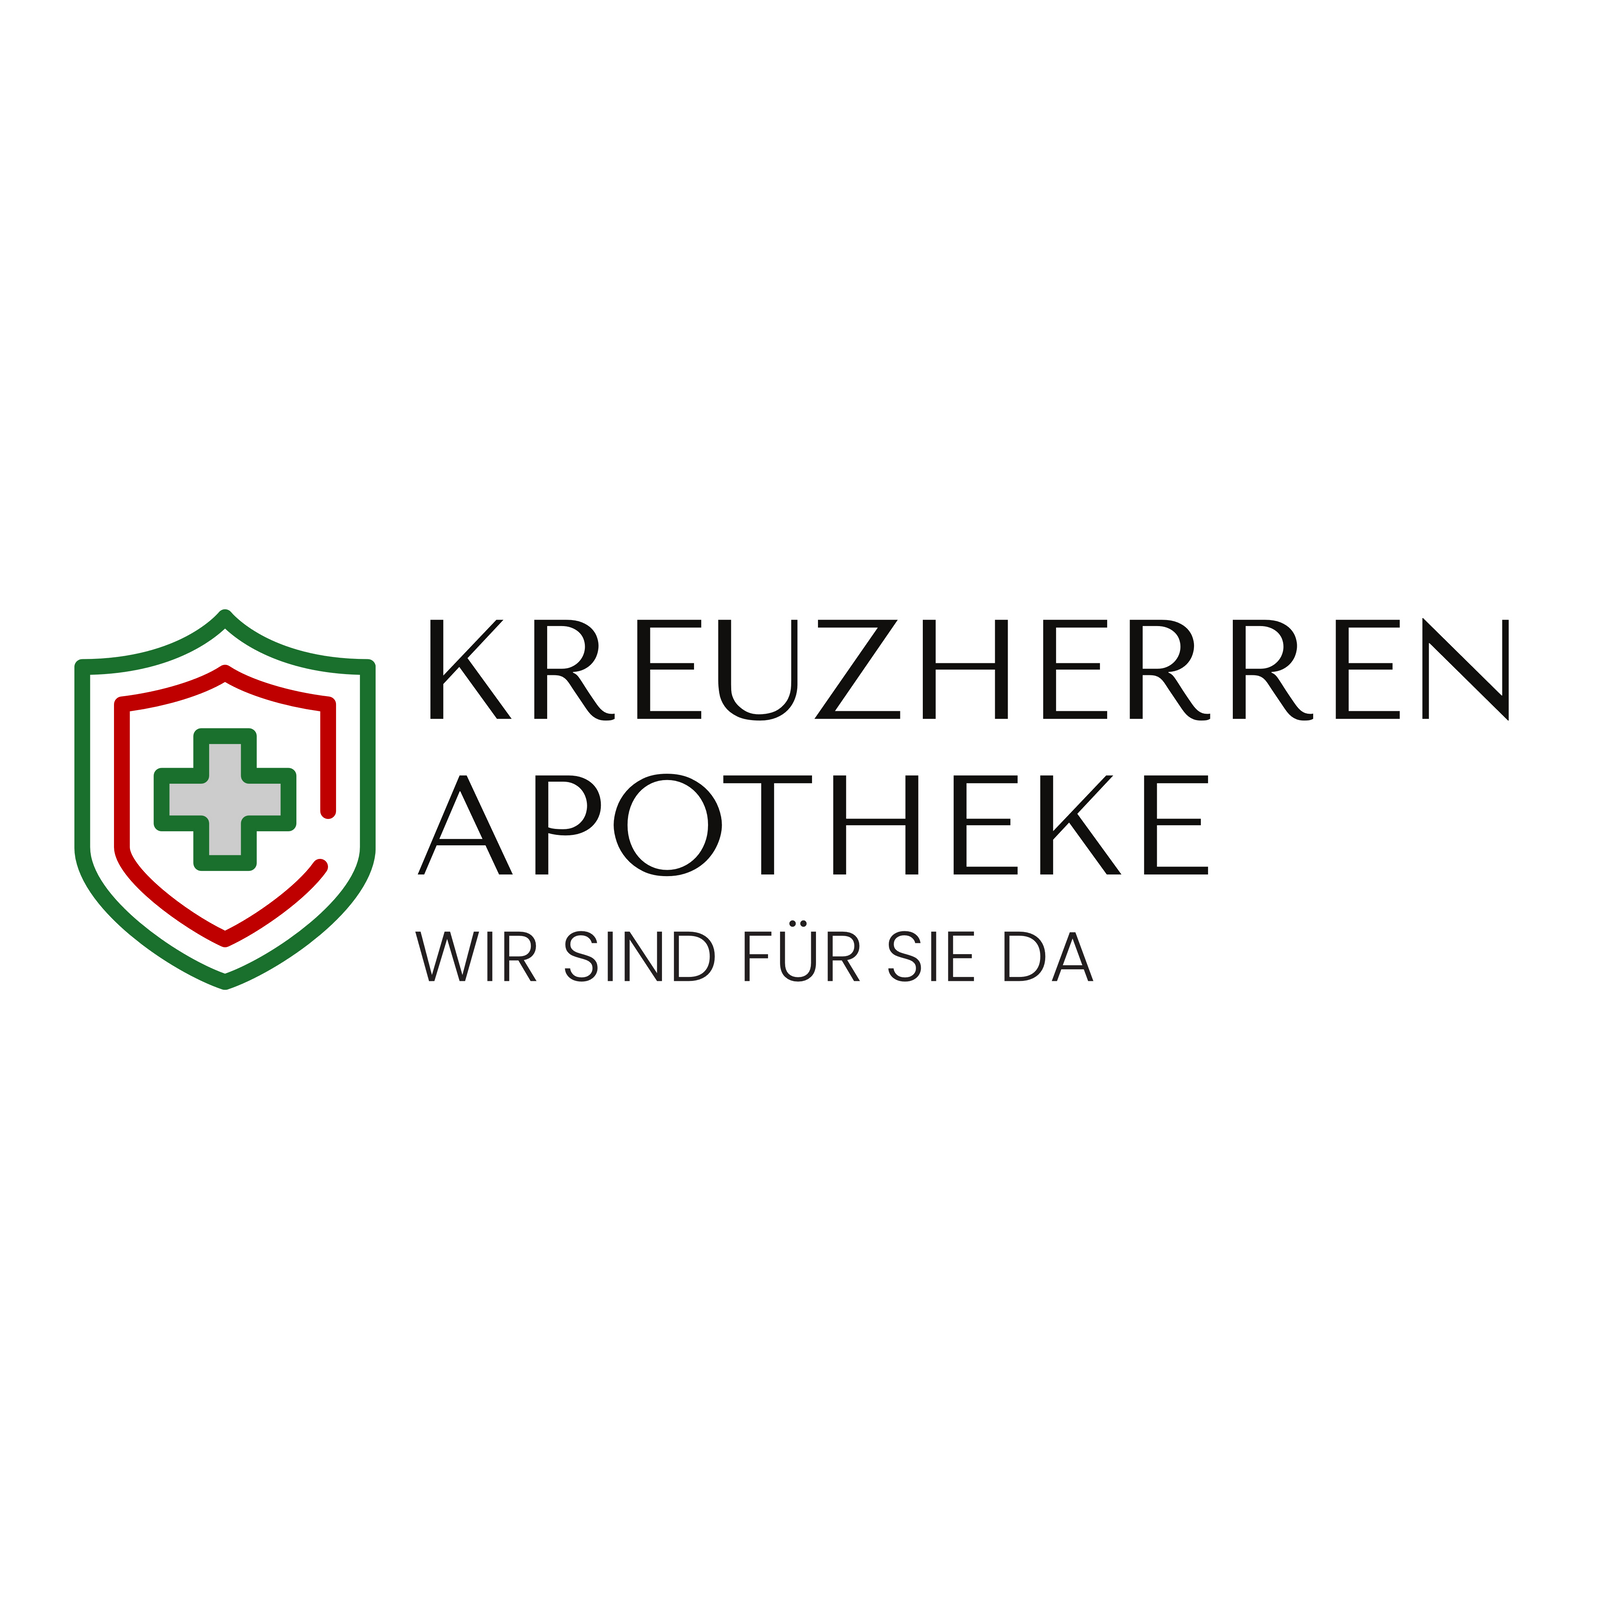 Kreuzherren-Apotheke in Mönchengladbach - Logo